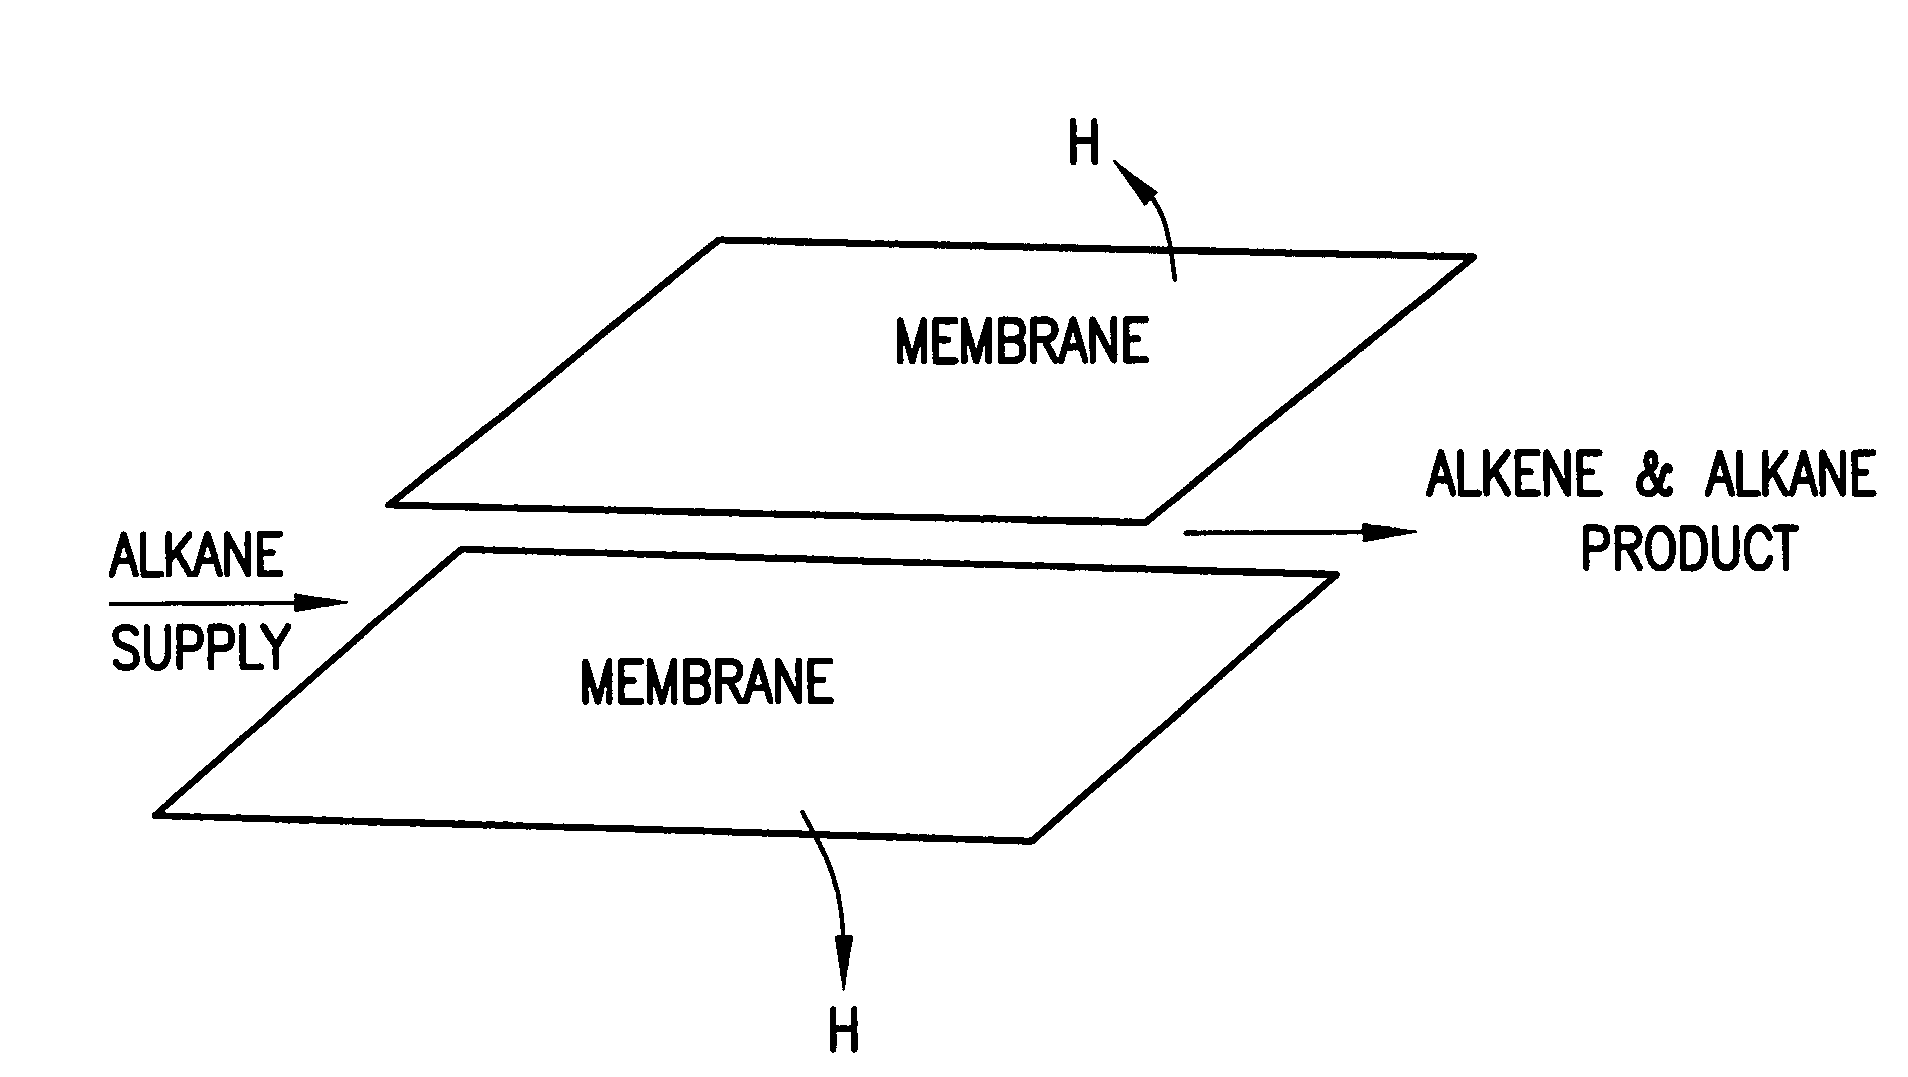 Hydrogen transport membranes for dehydrogenation reactions